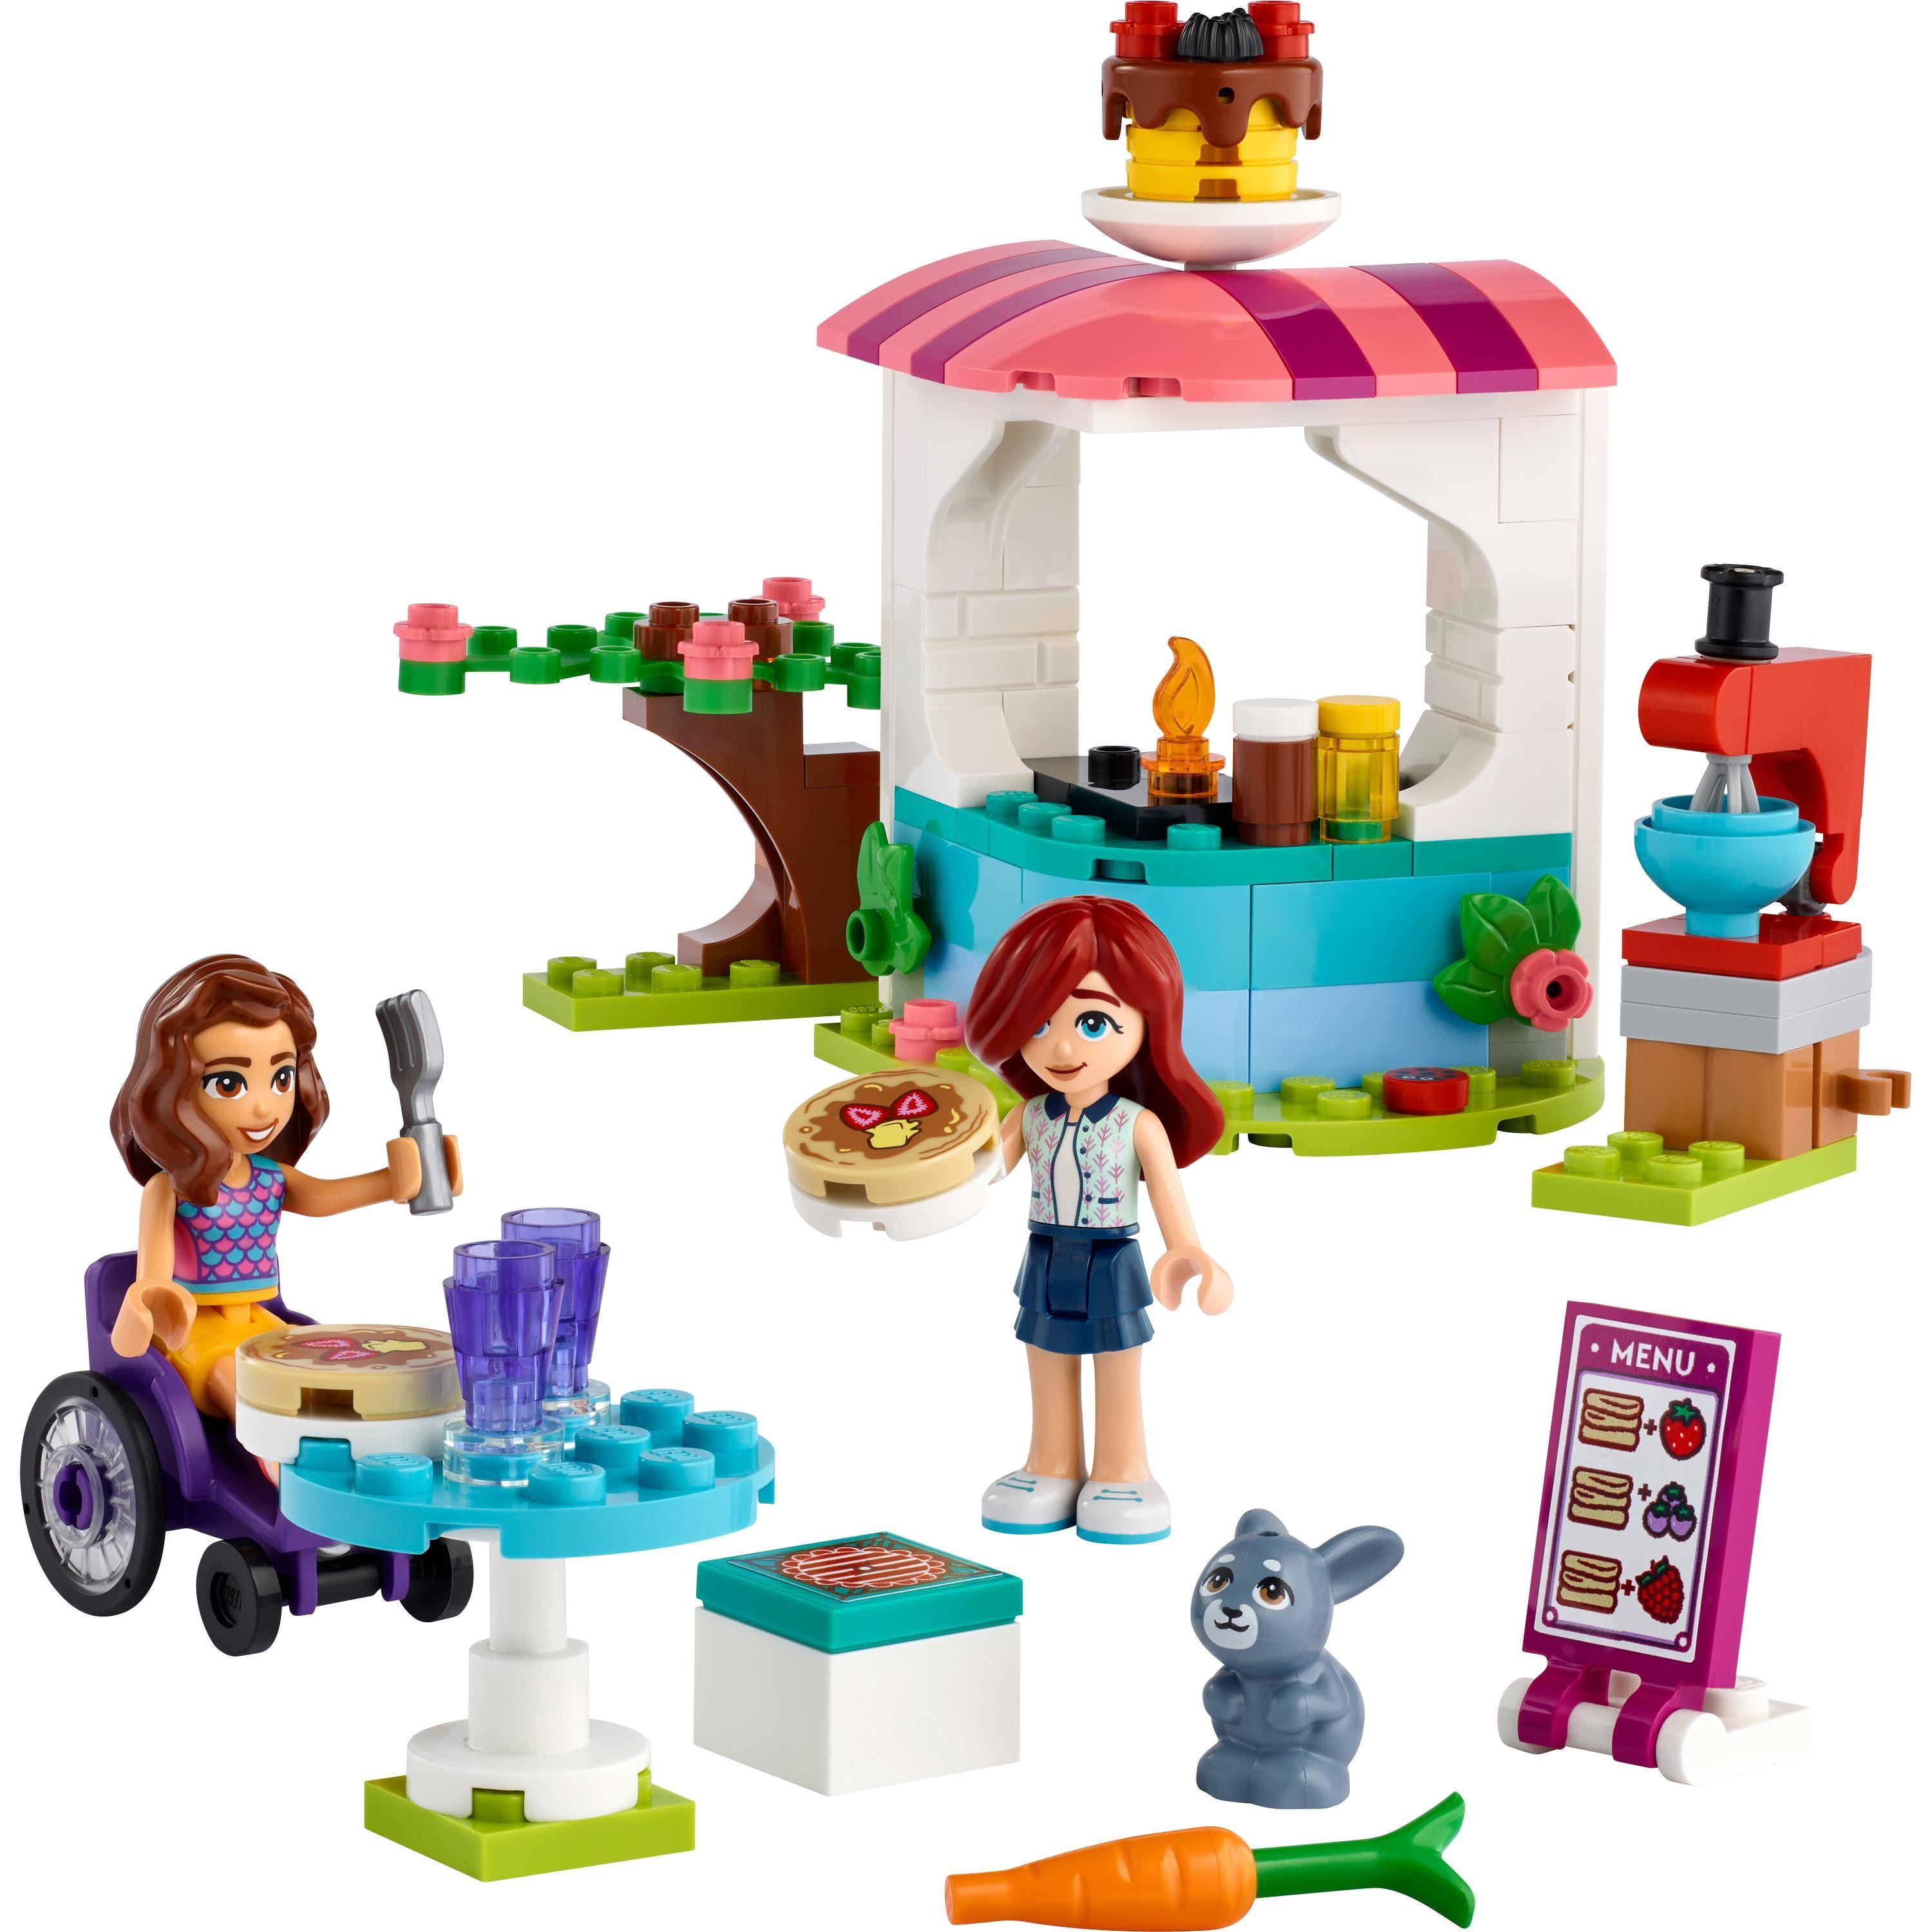 LEGO® Friends Heartlake City Pancake Shop | 41753